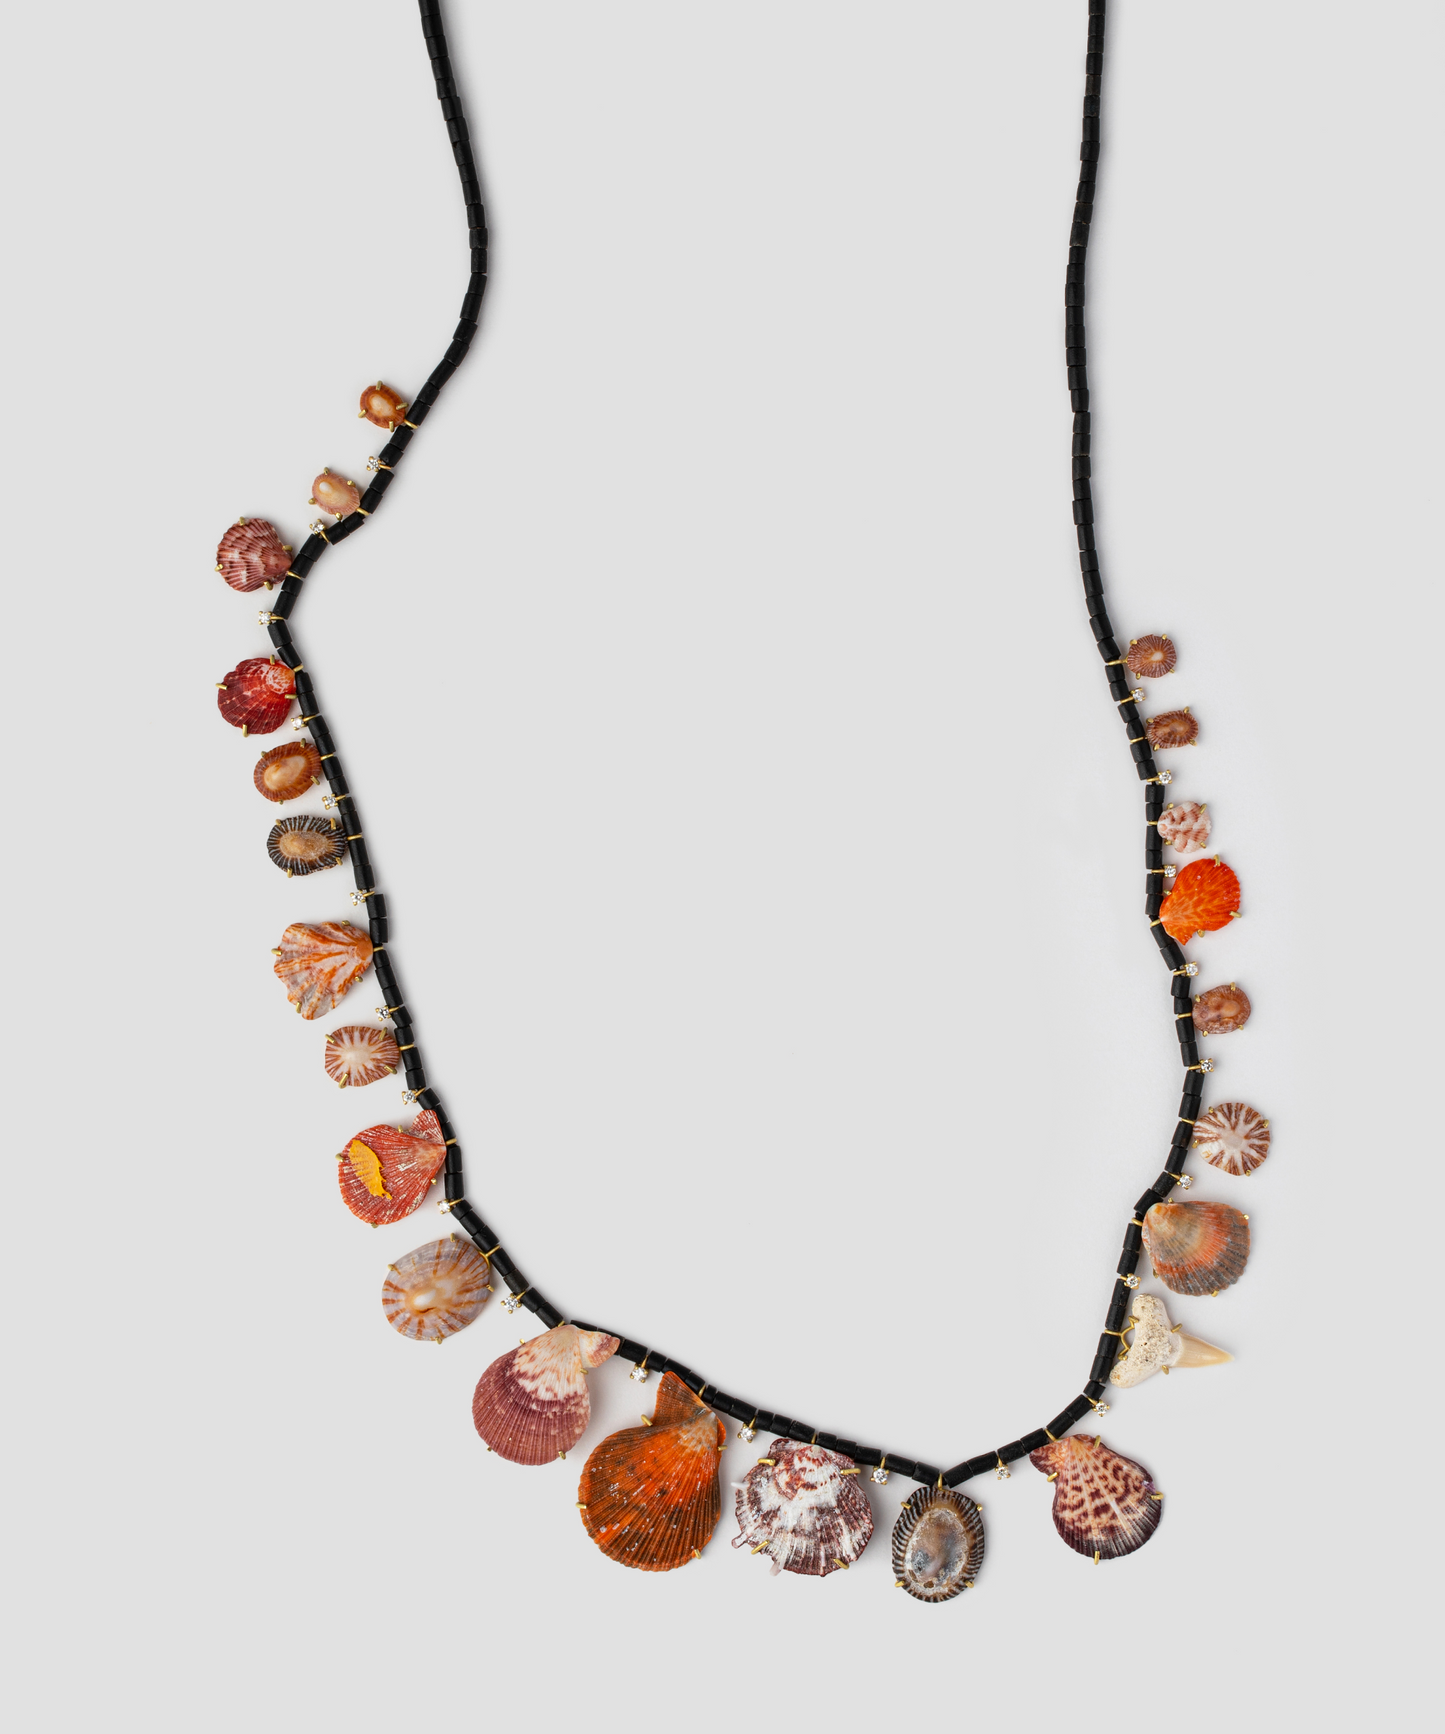 Black Jade Beads with Shells, Shark Tooth and Diamonds